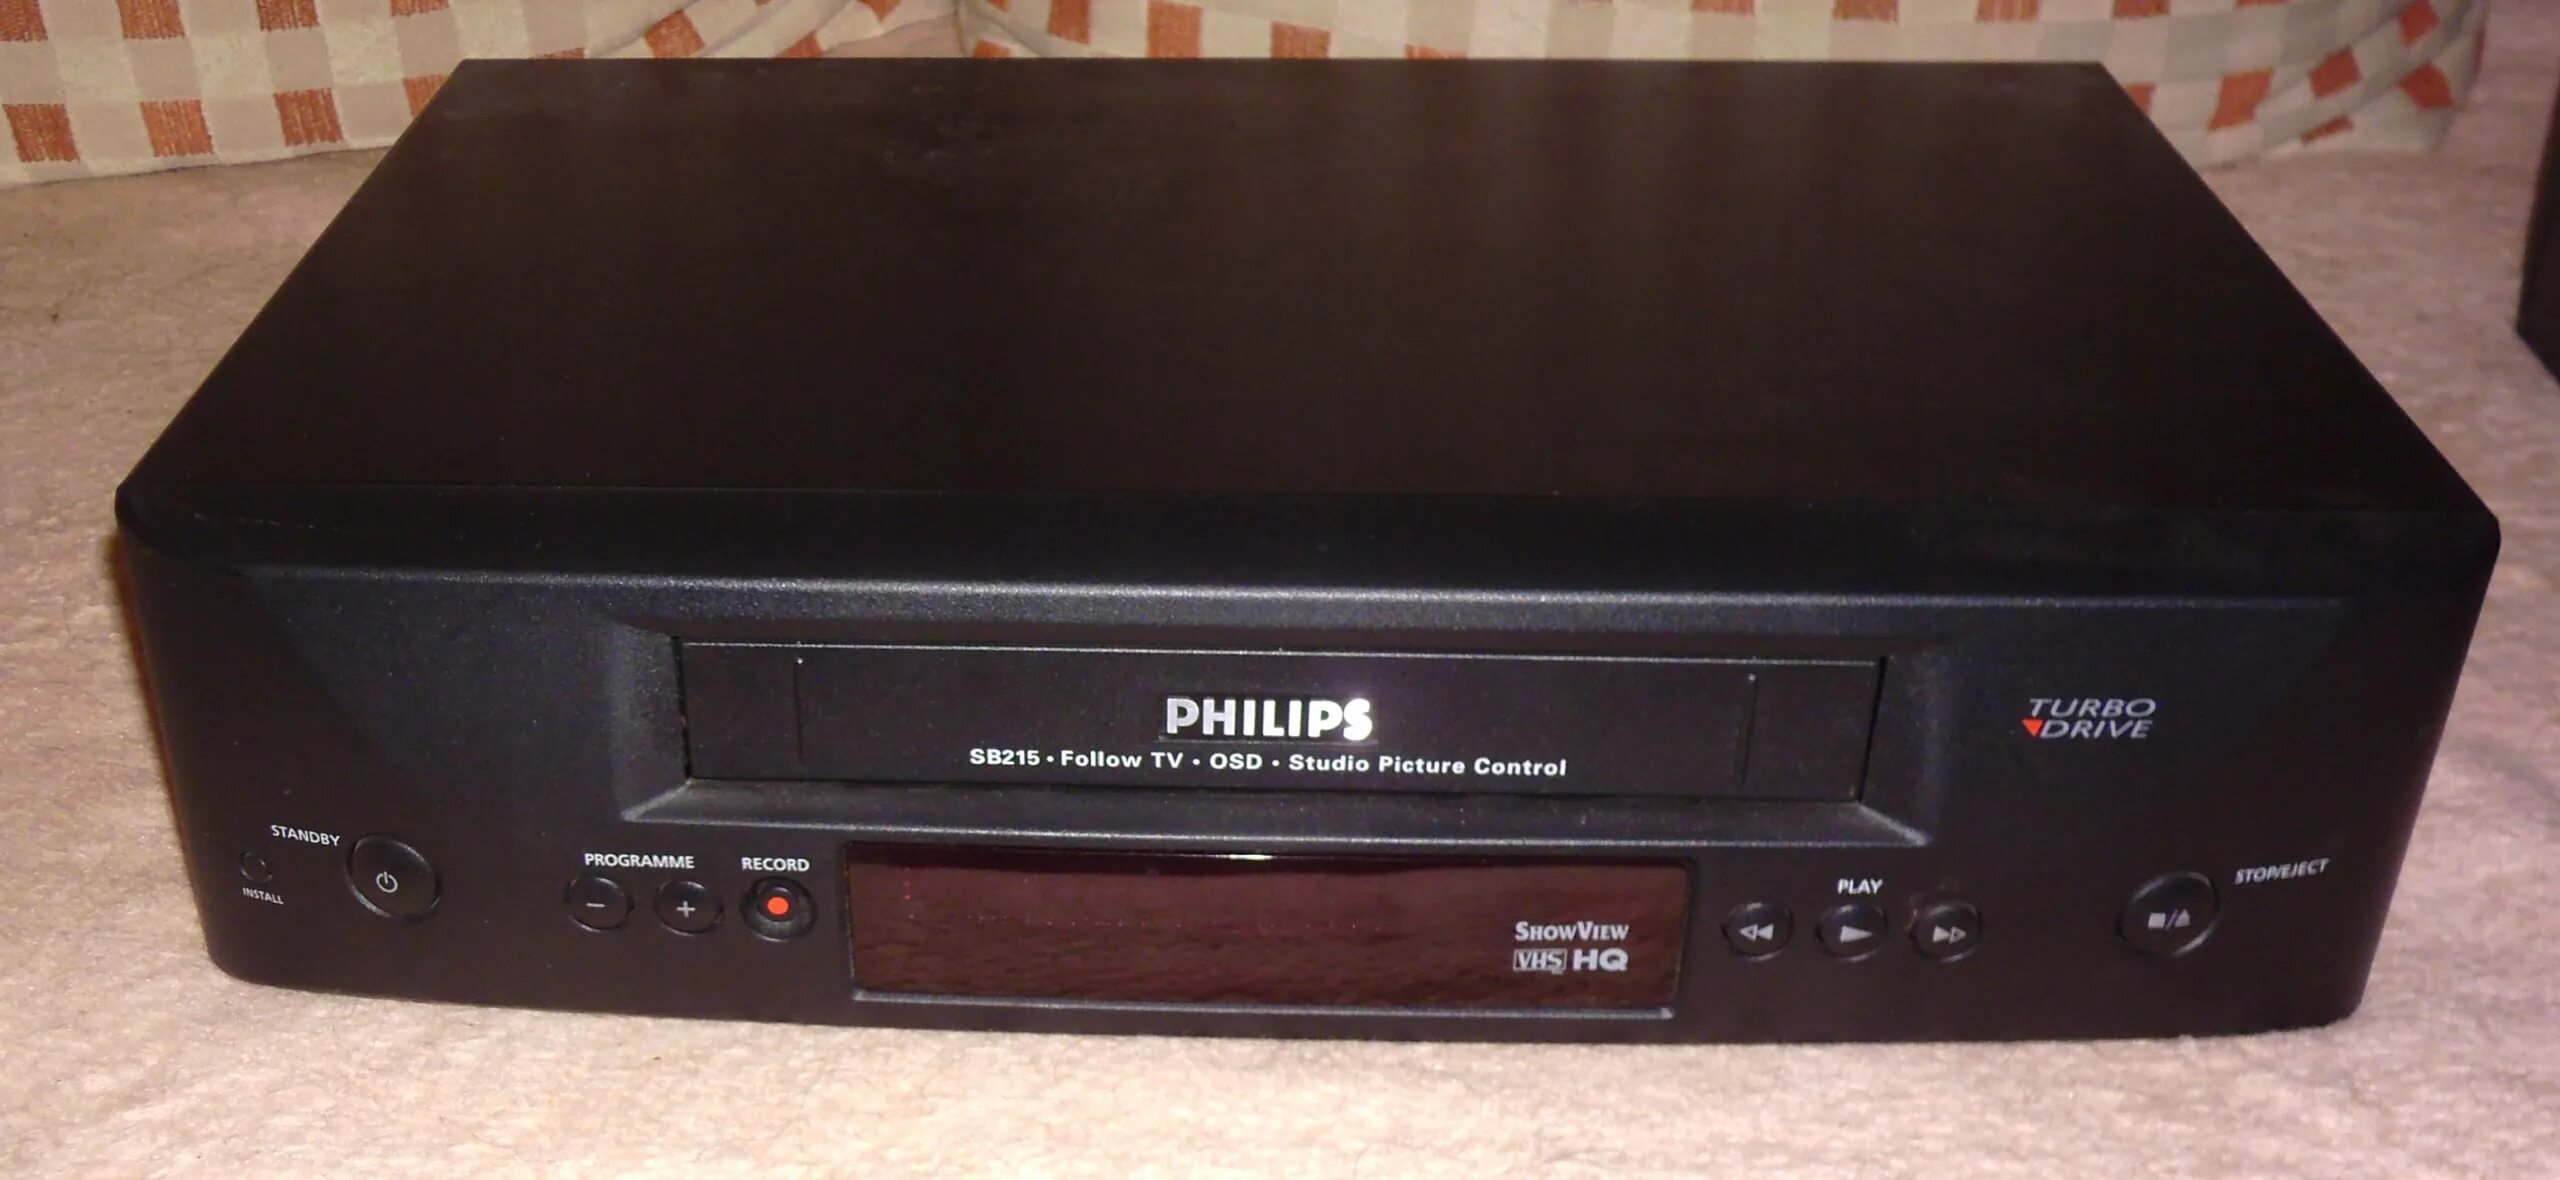 Видеомагнитофон Philips vr254. Видеомагнитофон Philips vr732. Видеомагнитофоны Philips vr497. Видеомагнитофон Philips VR 742. Видеомагнитофон филипс